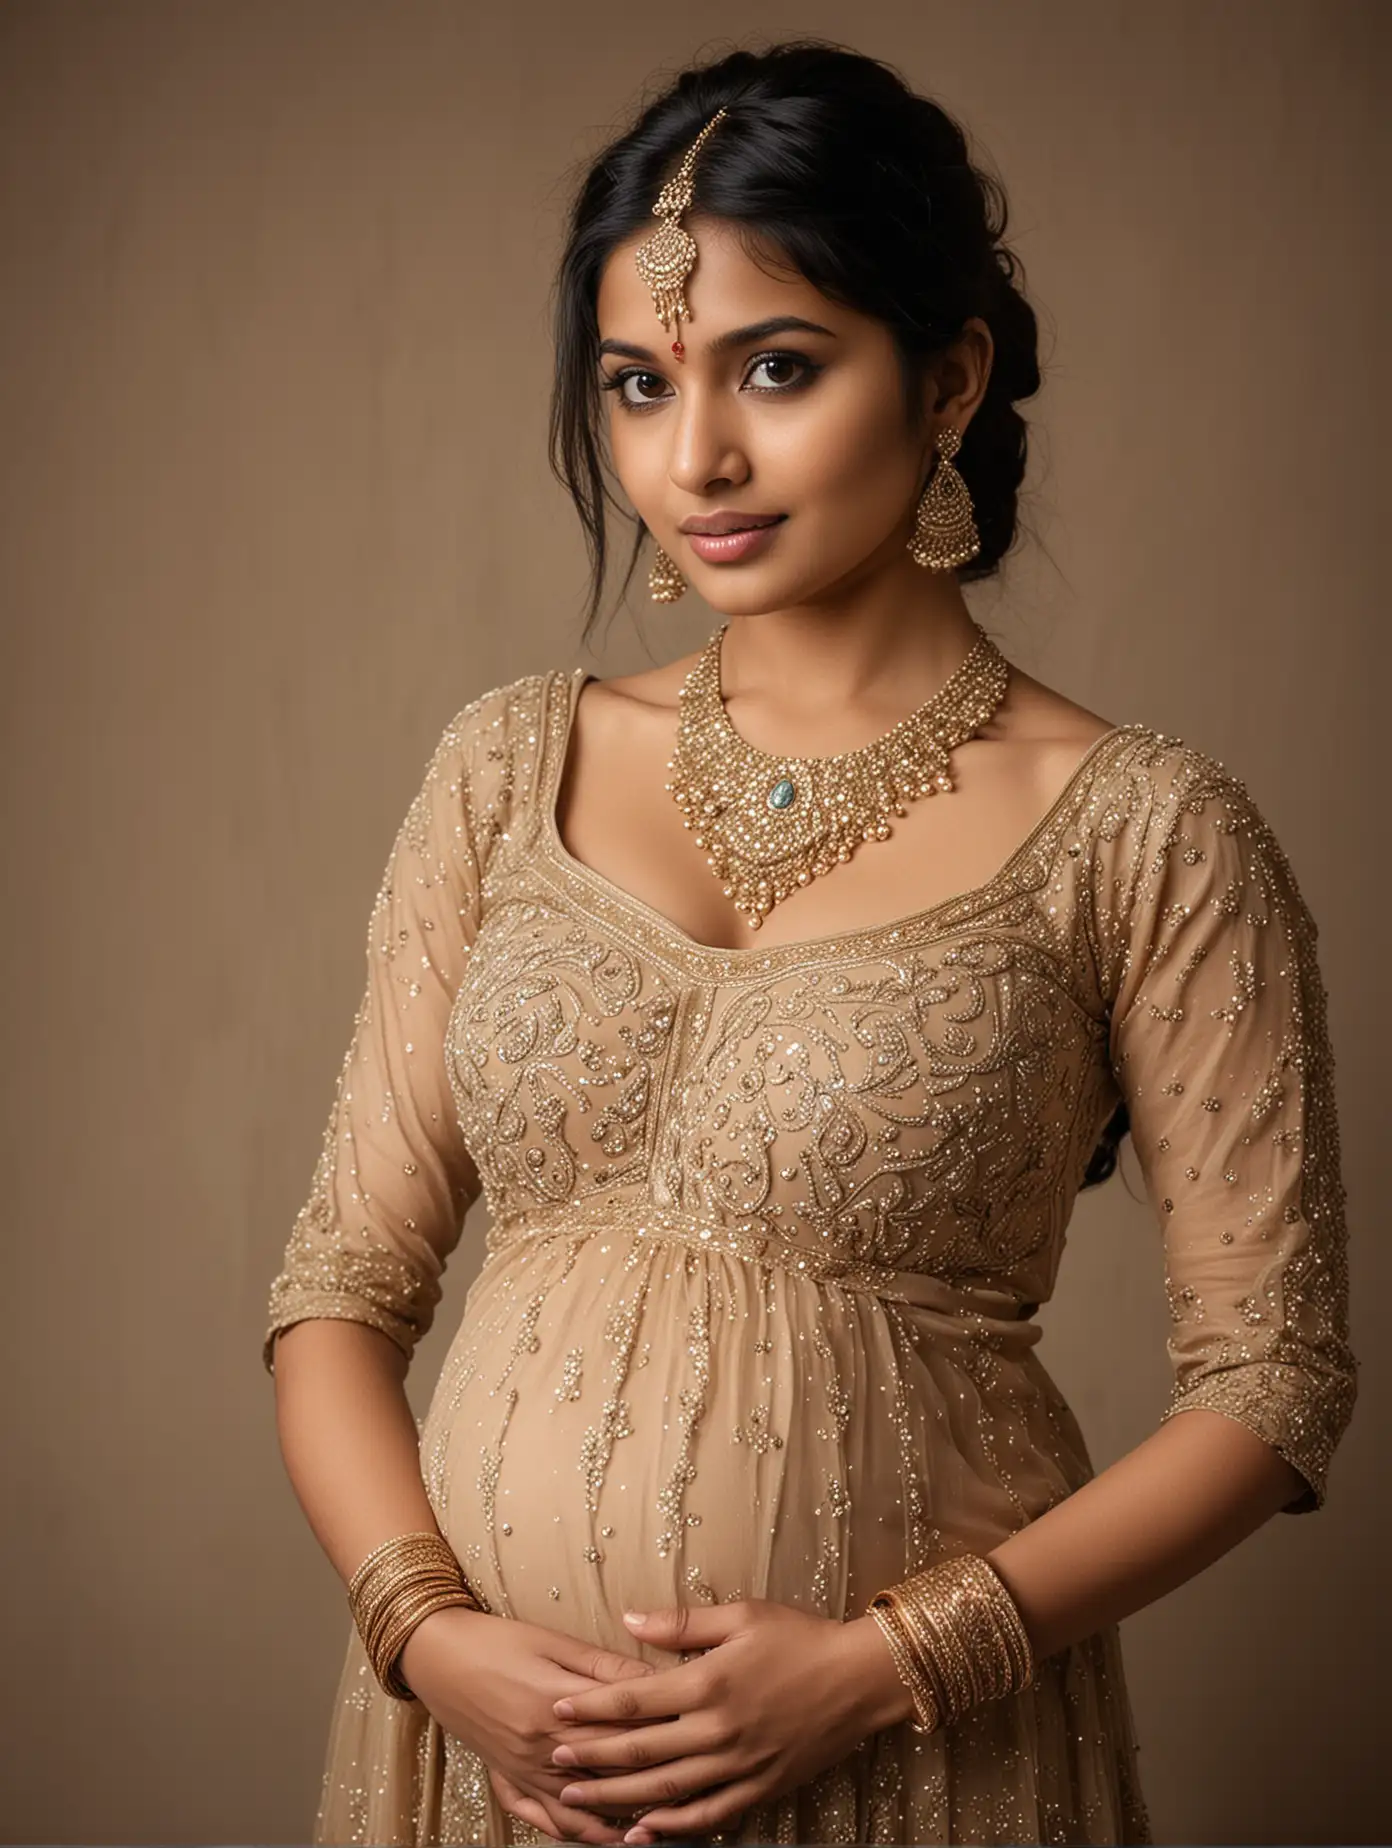 Glamorous Indian Woman in Elegant Maternity Attire